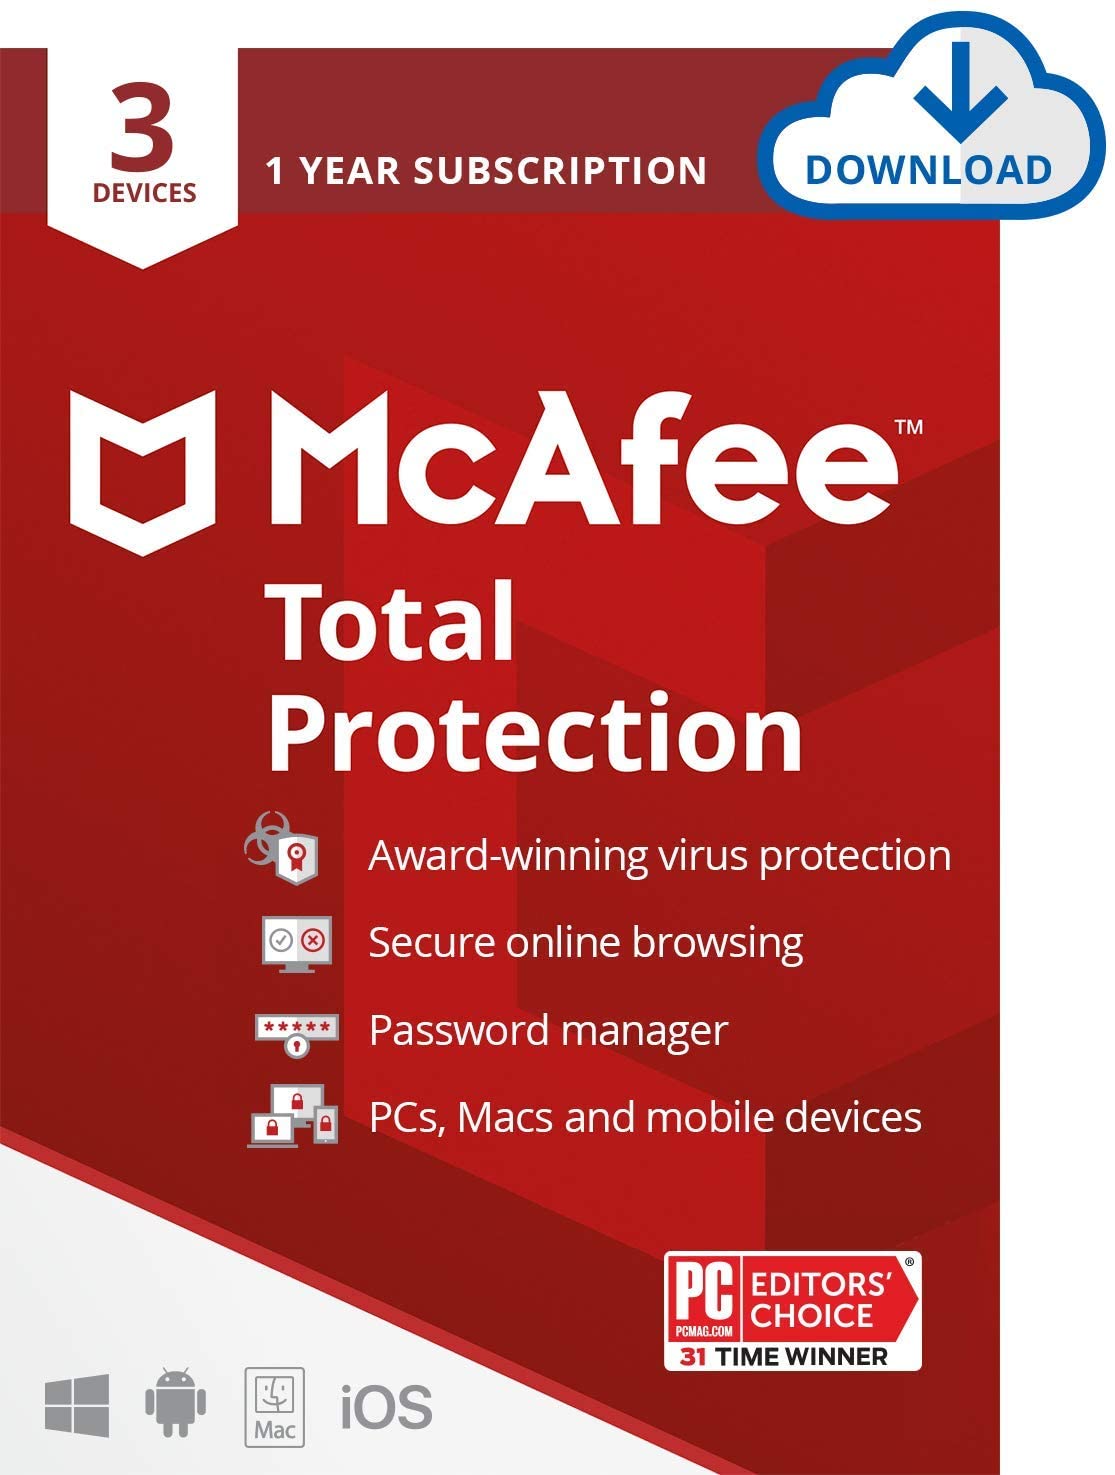 mcafee malware removal tool for mac